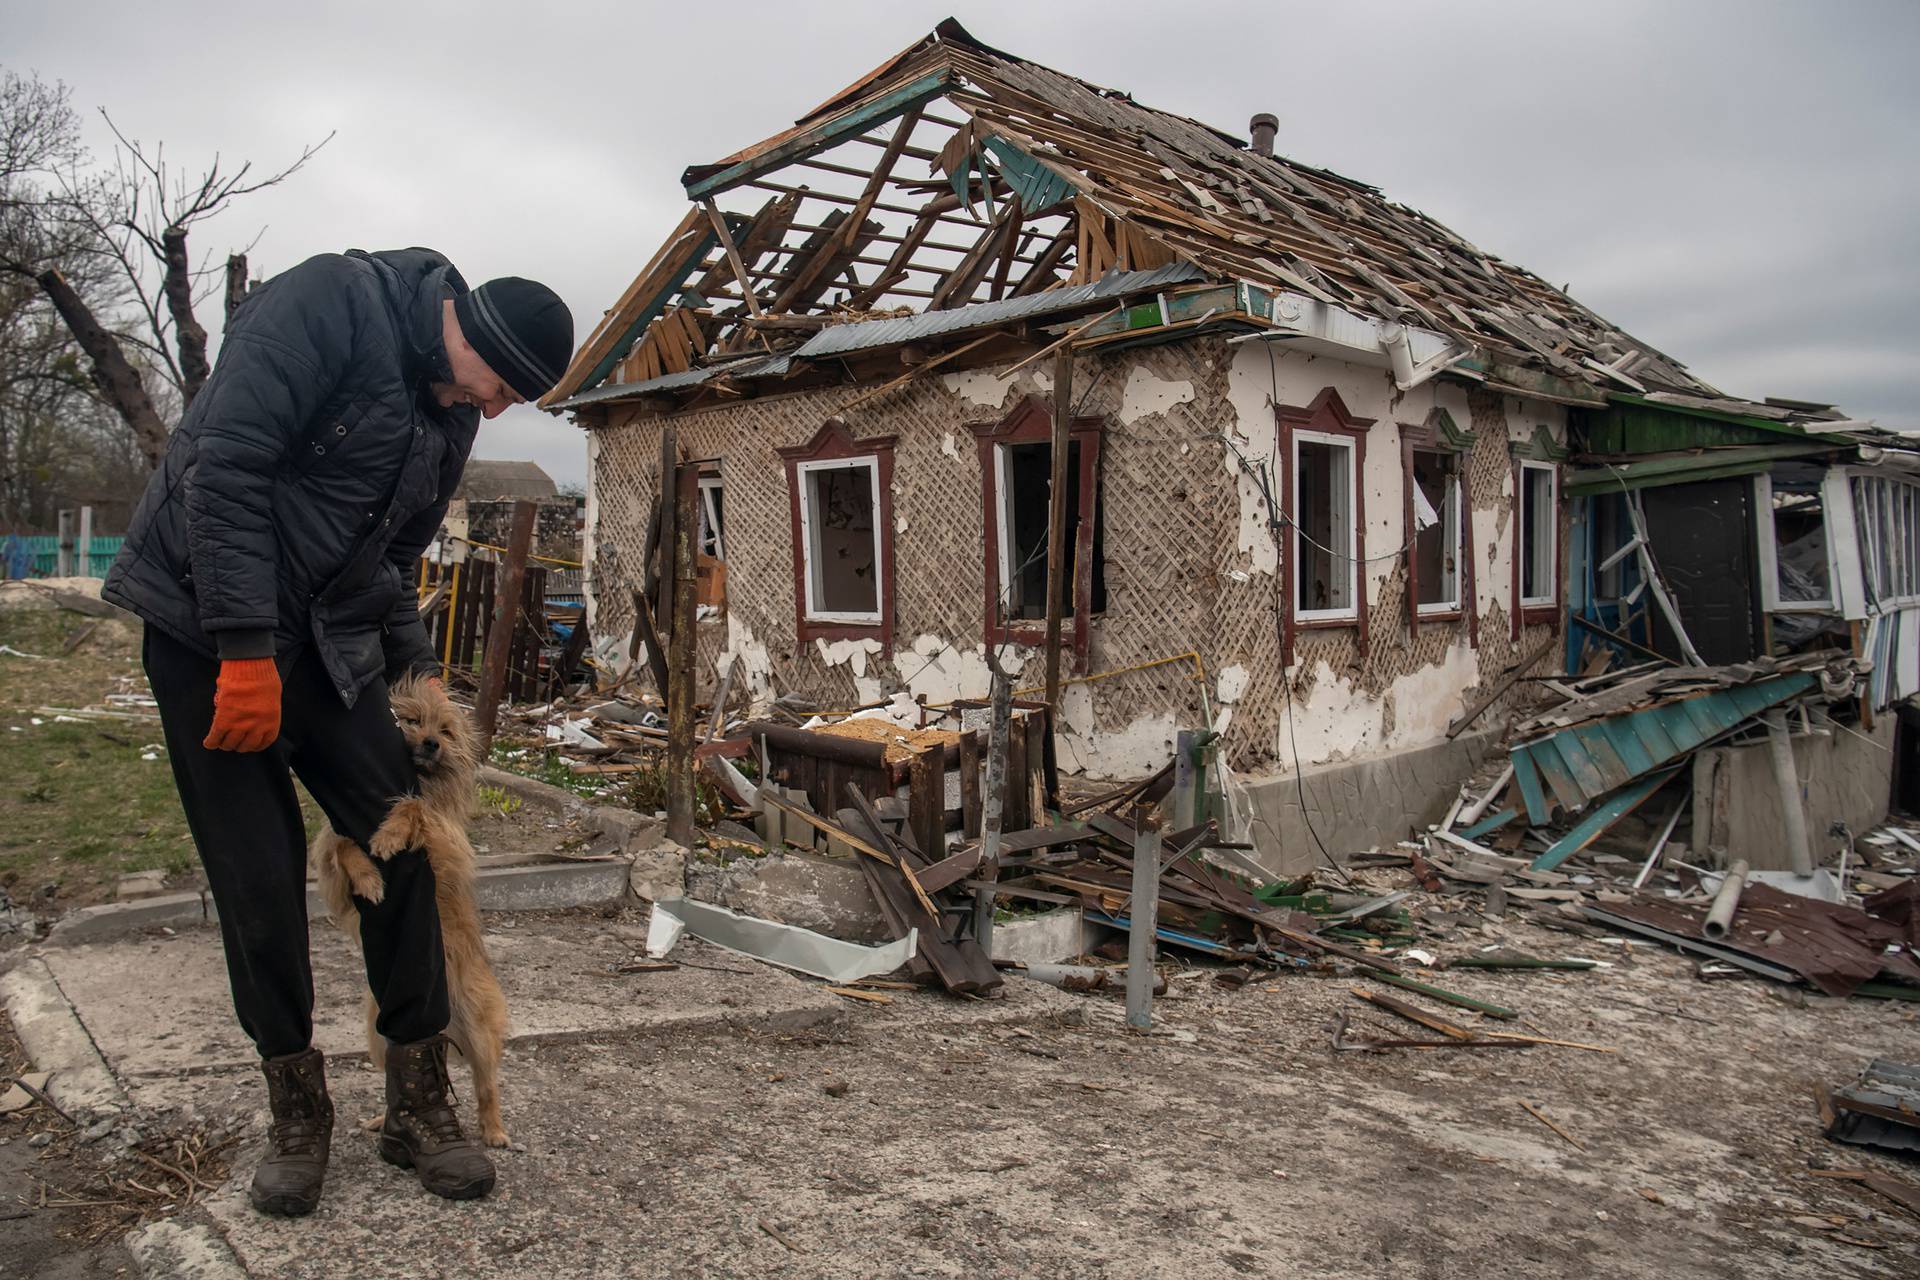 Russia's invasion of Ukraine continues, in Kukhari